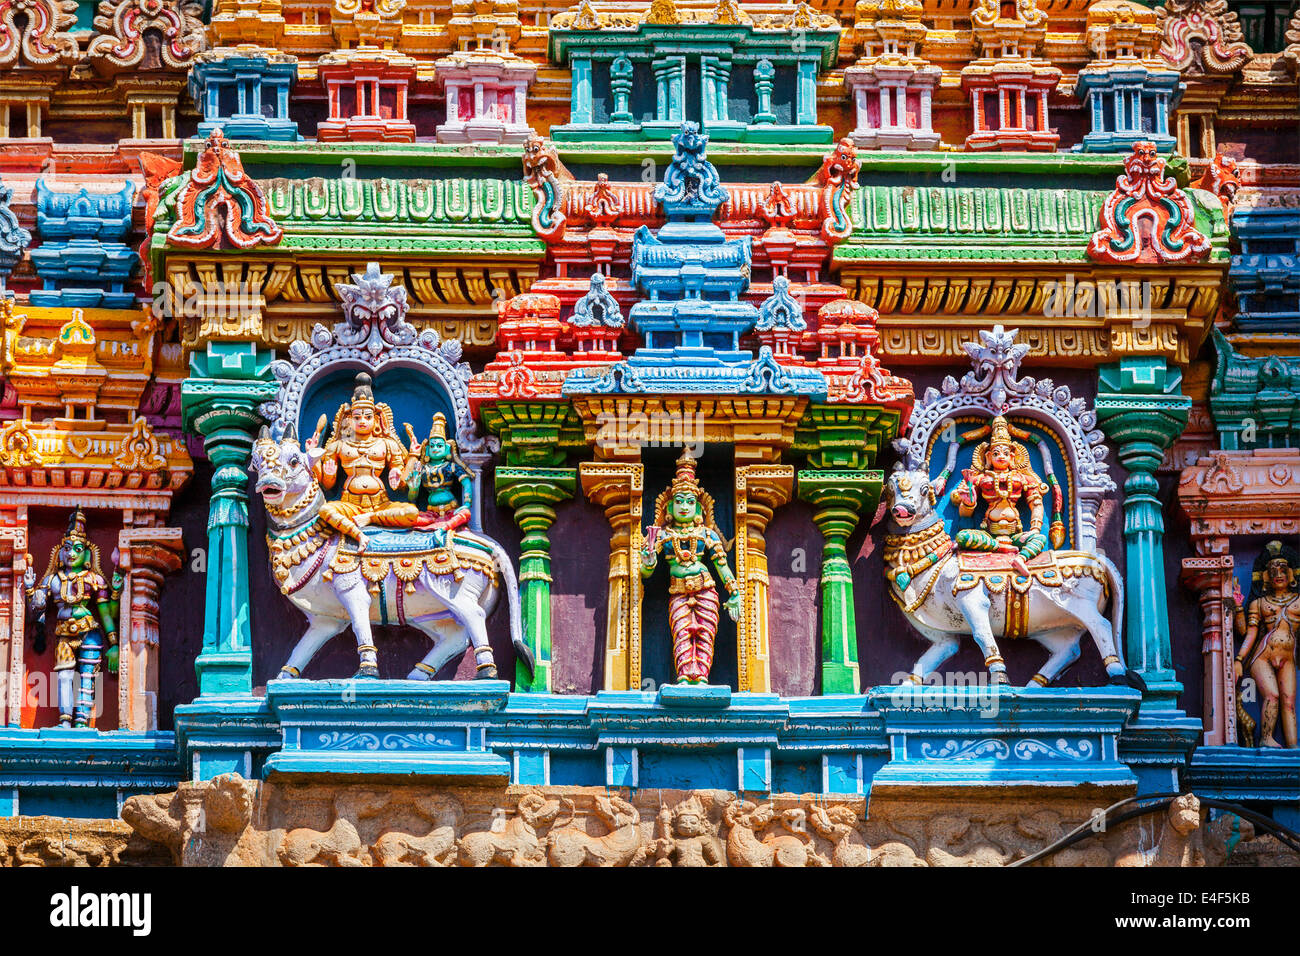 Shiva und Parvati auf Bull Bilder. Skulpturen auf Hindu Tempel Gopura (Turm). Minakshi-Tempel in Madurai, Tamil Nadu, Indien Stockfoto